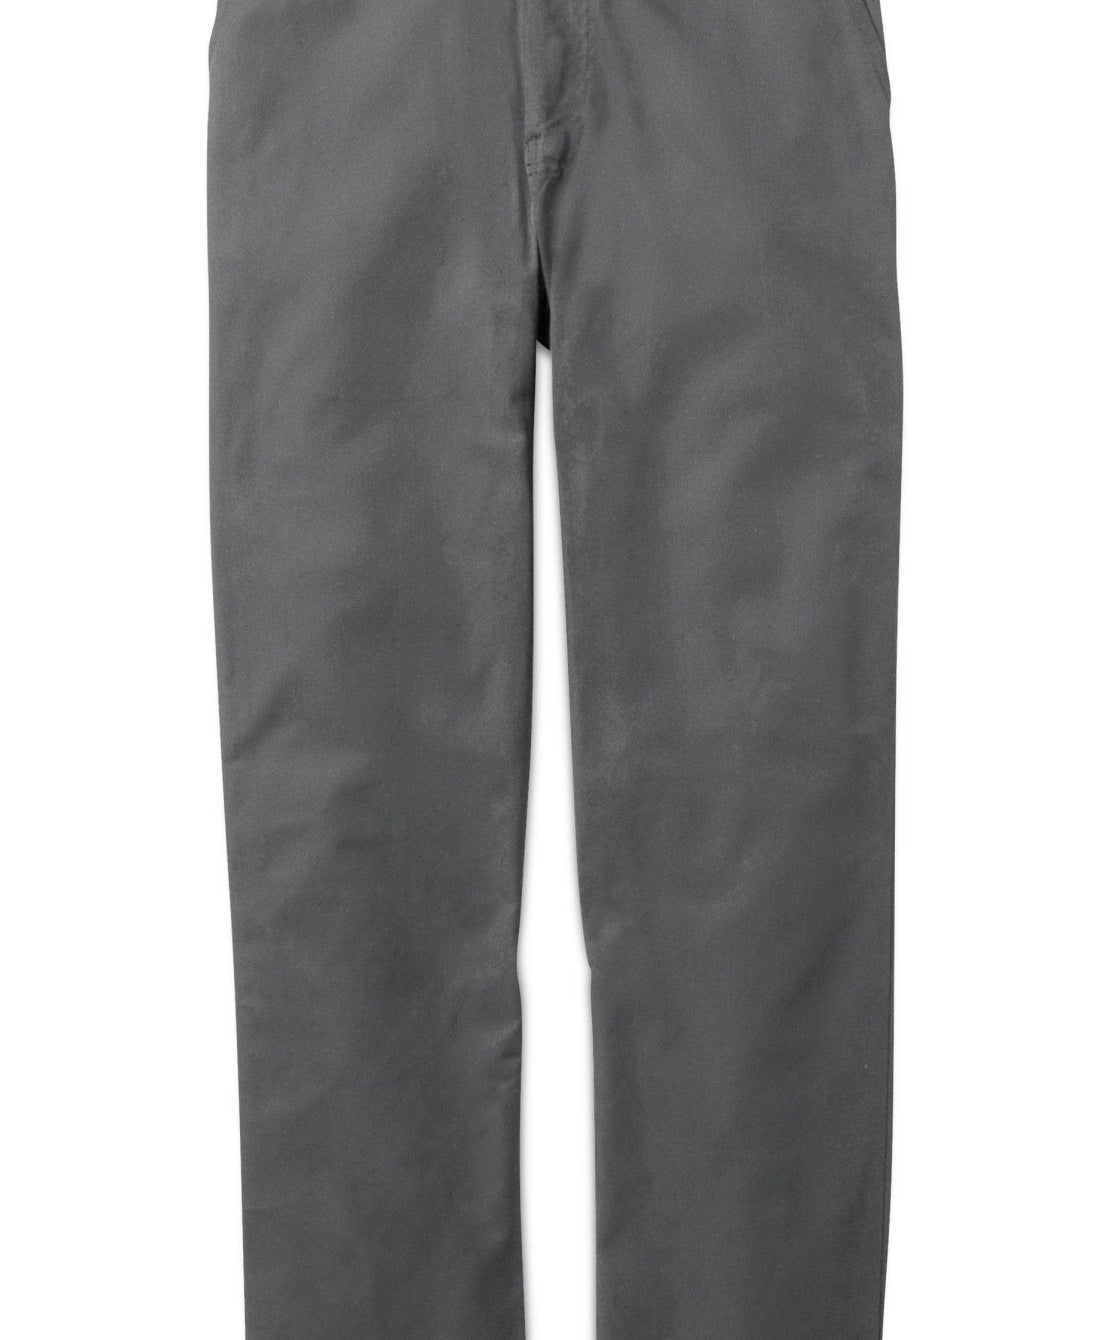 FR Women's GlenGuard Uniform Pants - Gray - Rasco FR